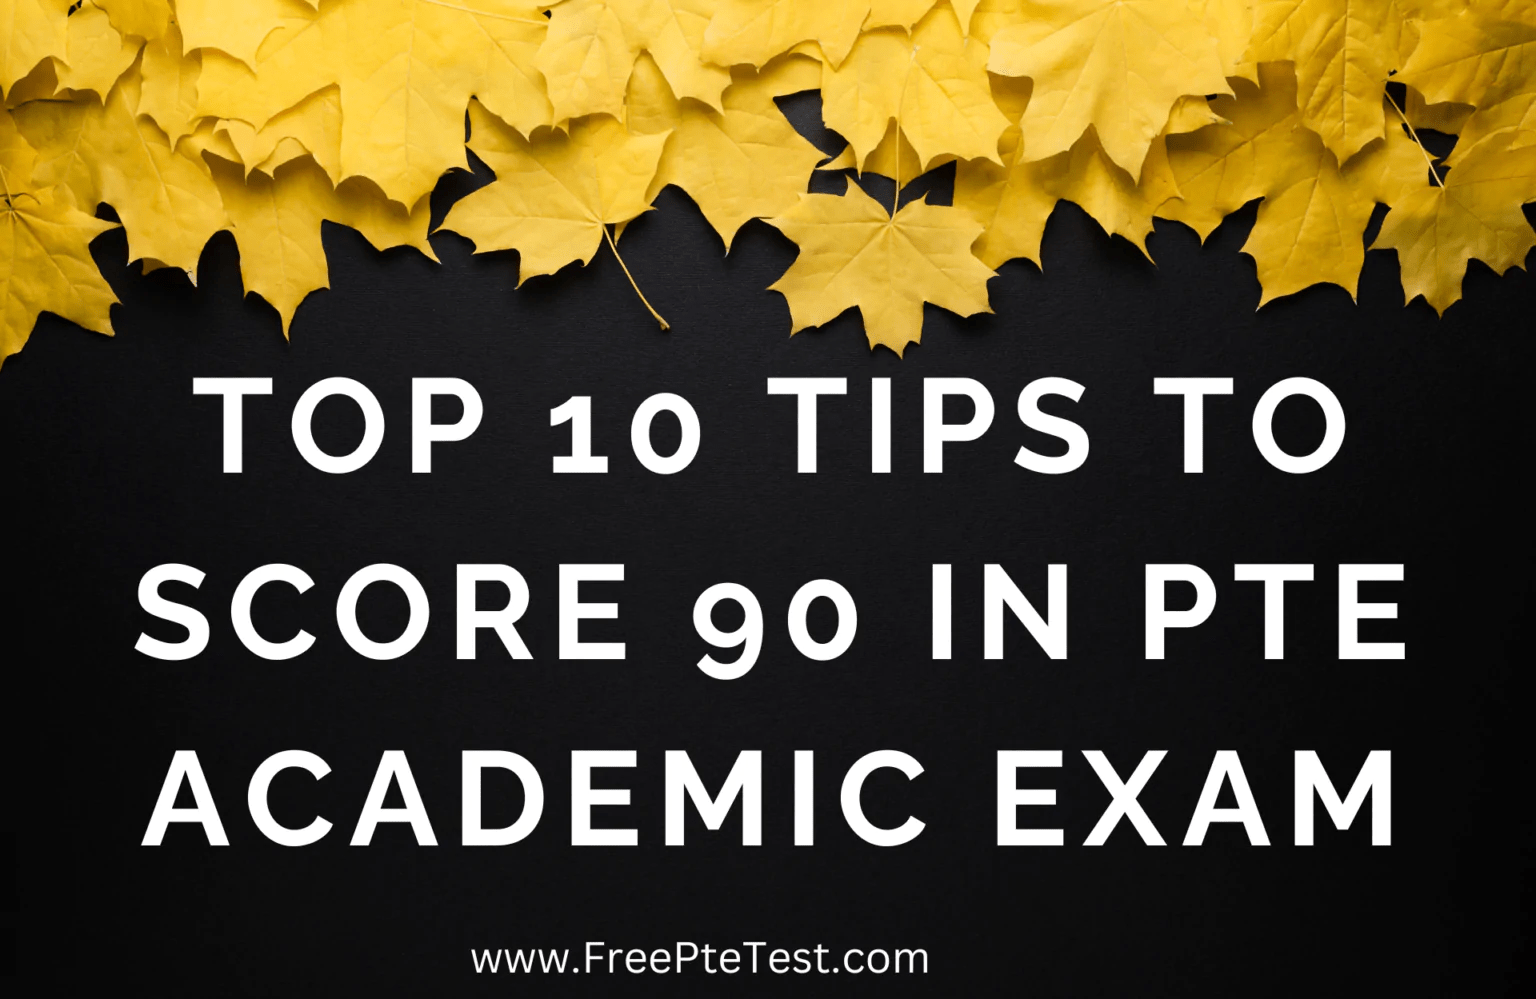 Top 10 Tips to Score 90 in PTE Academic Exam